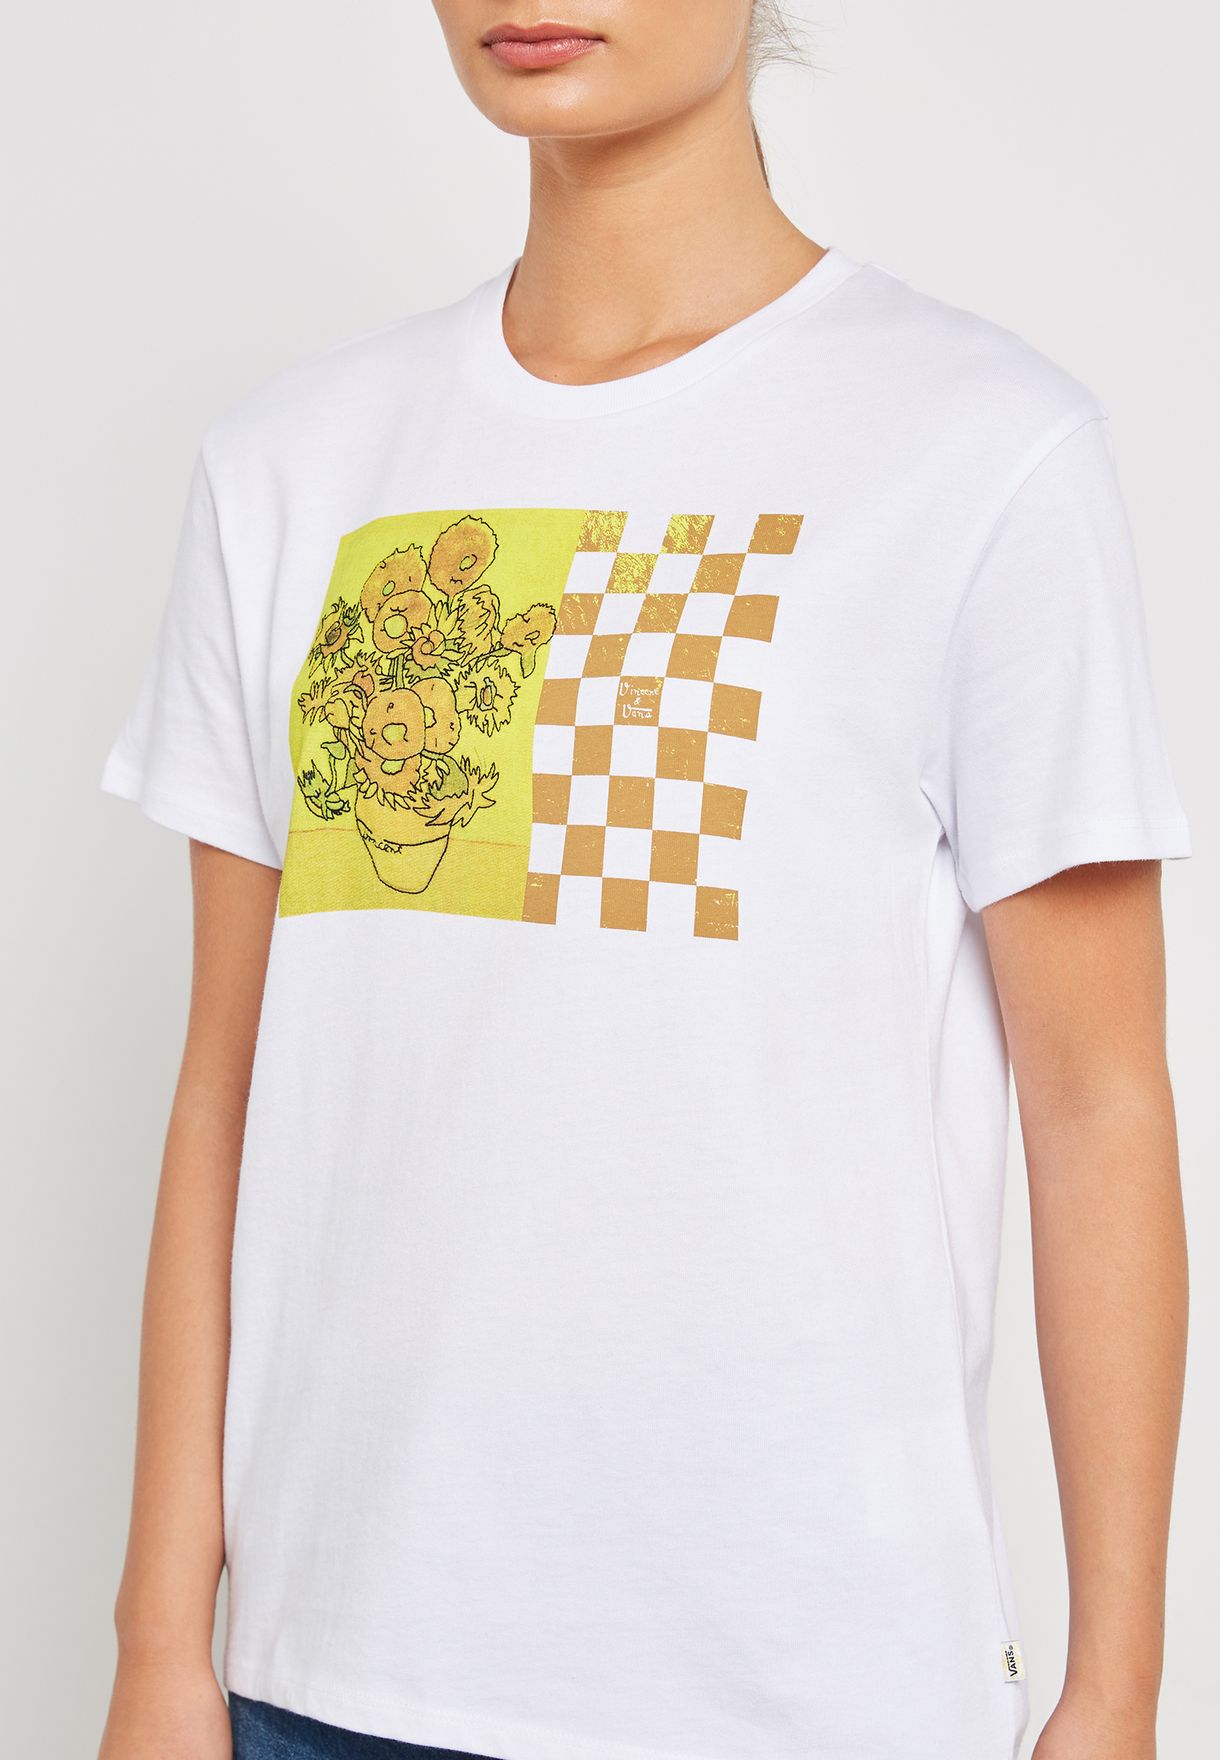 Not essential Ten Insight Buy Vans white Van Gogh Sunflower T-Shirt for Women in MENA, Worldwide